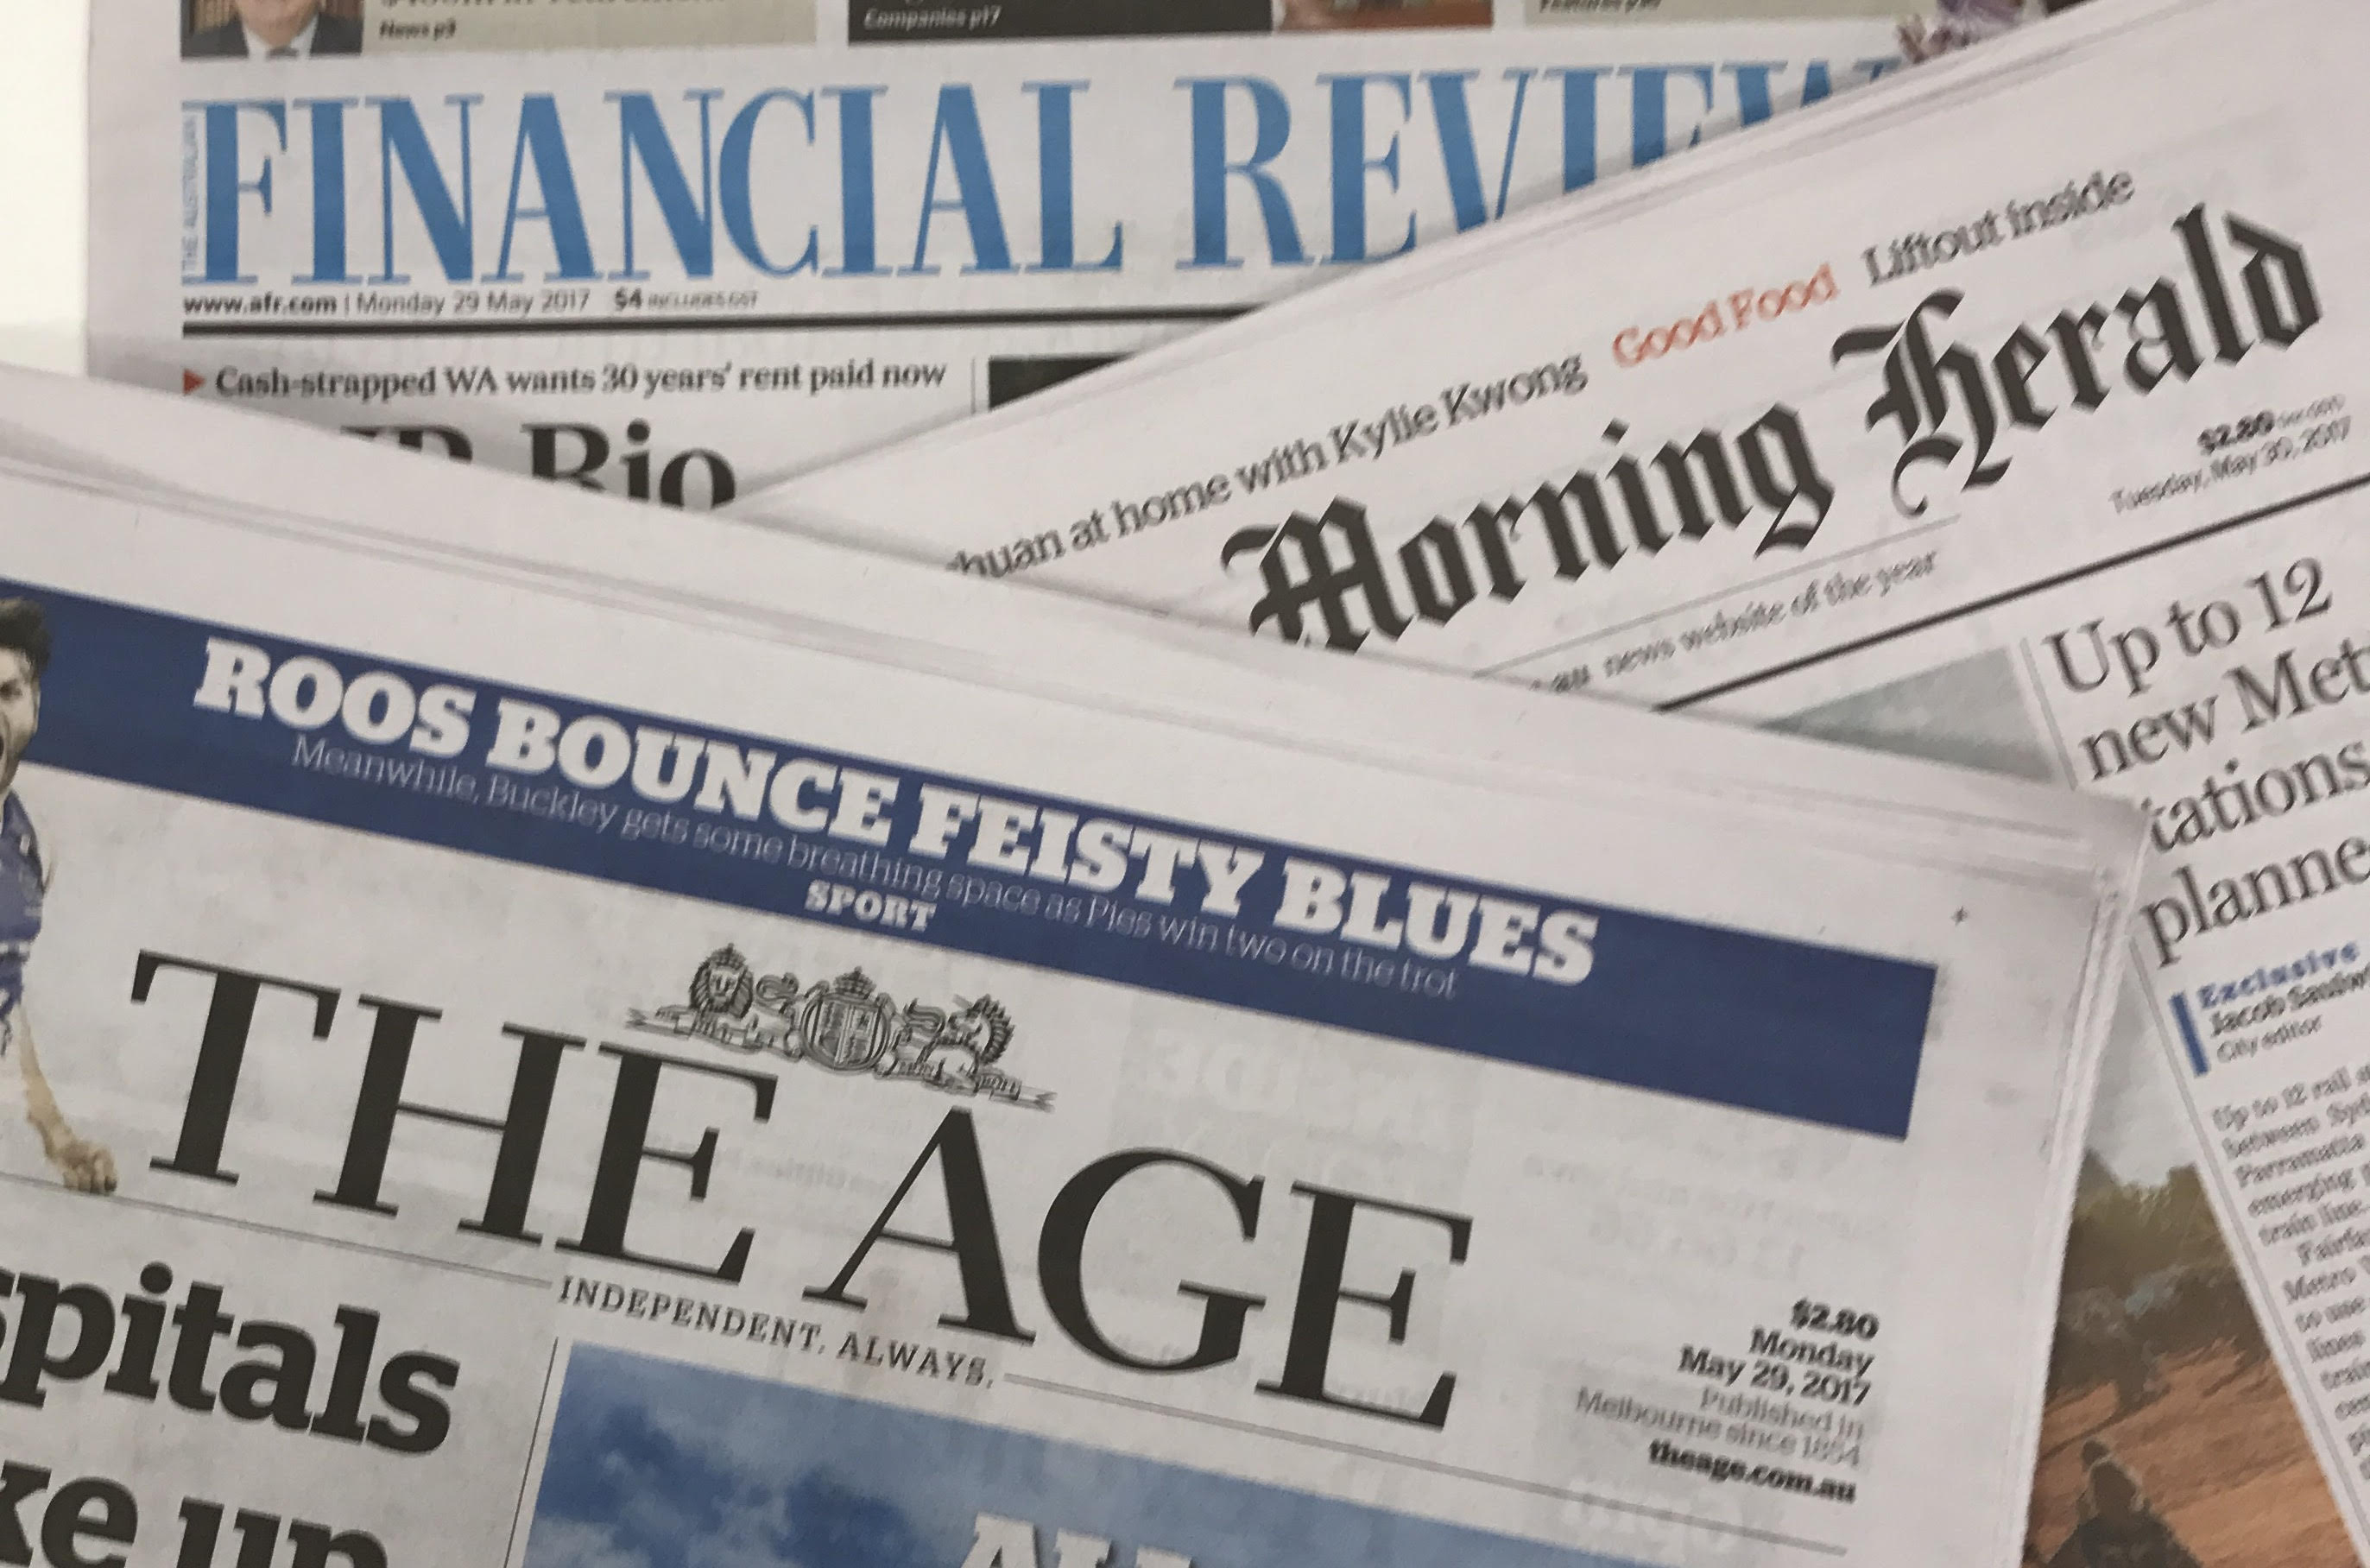 Newspaper 9. The age австралийская газета. The Australian Financial Review.